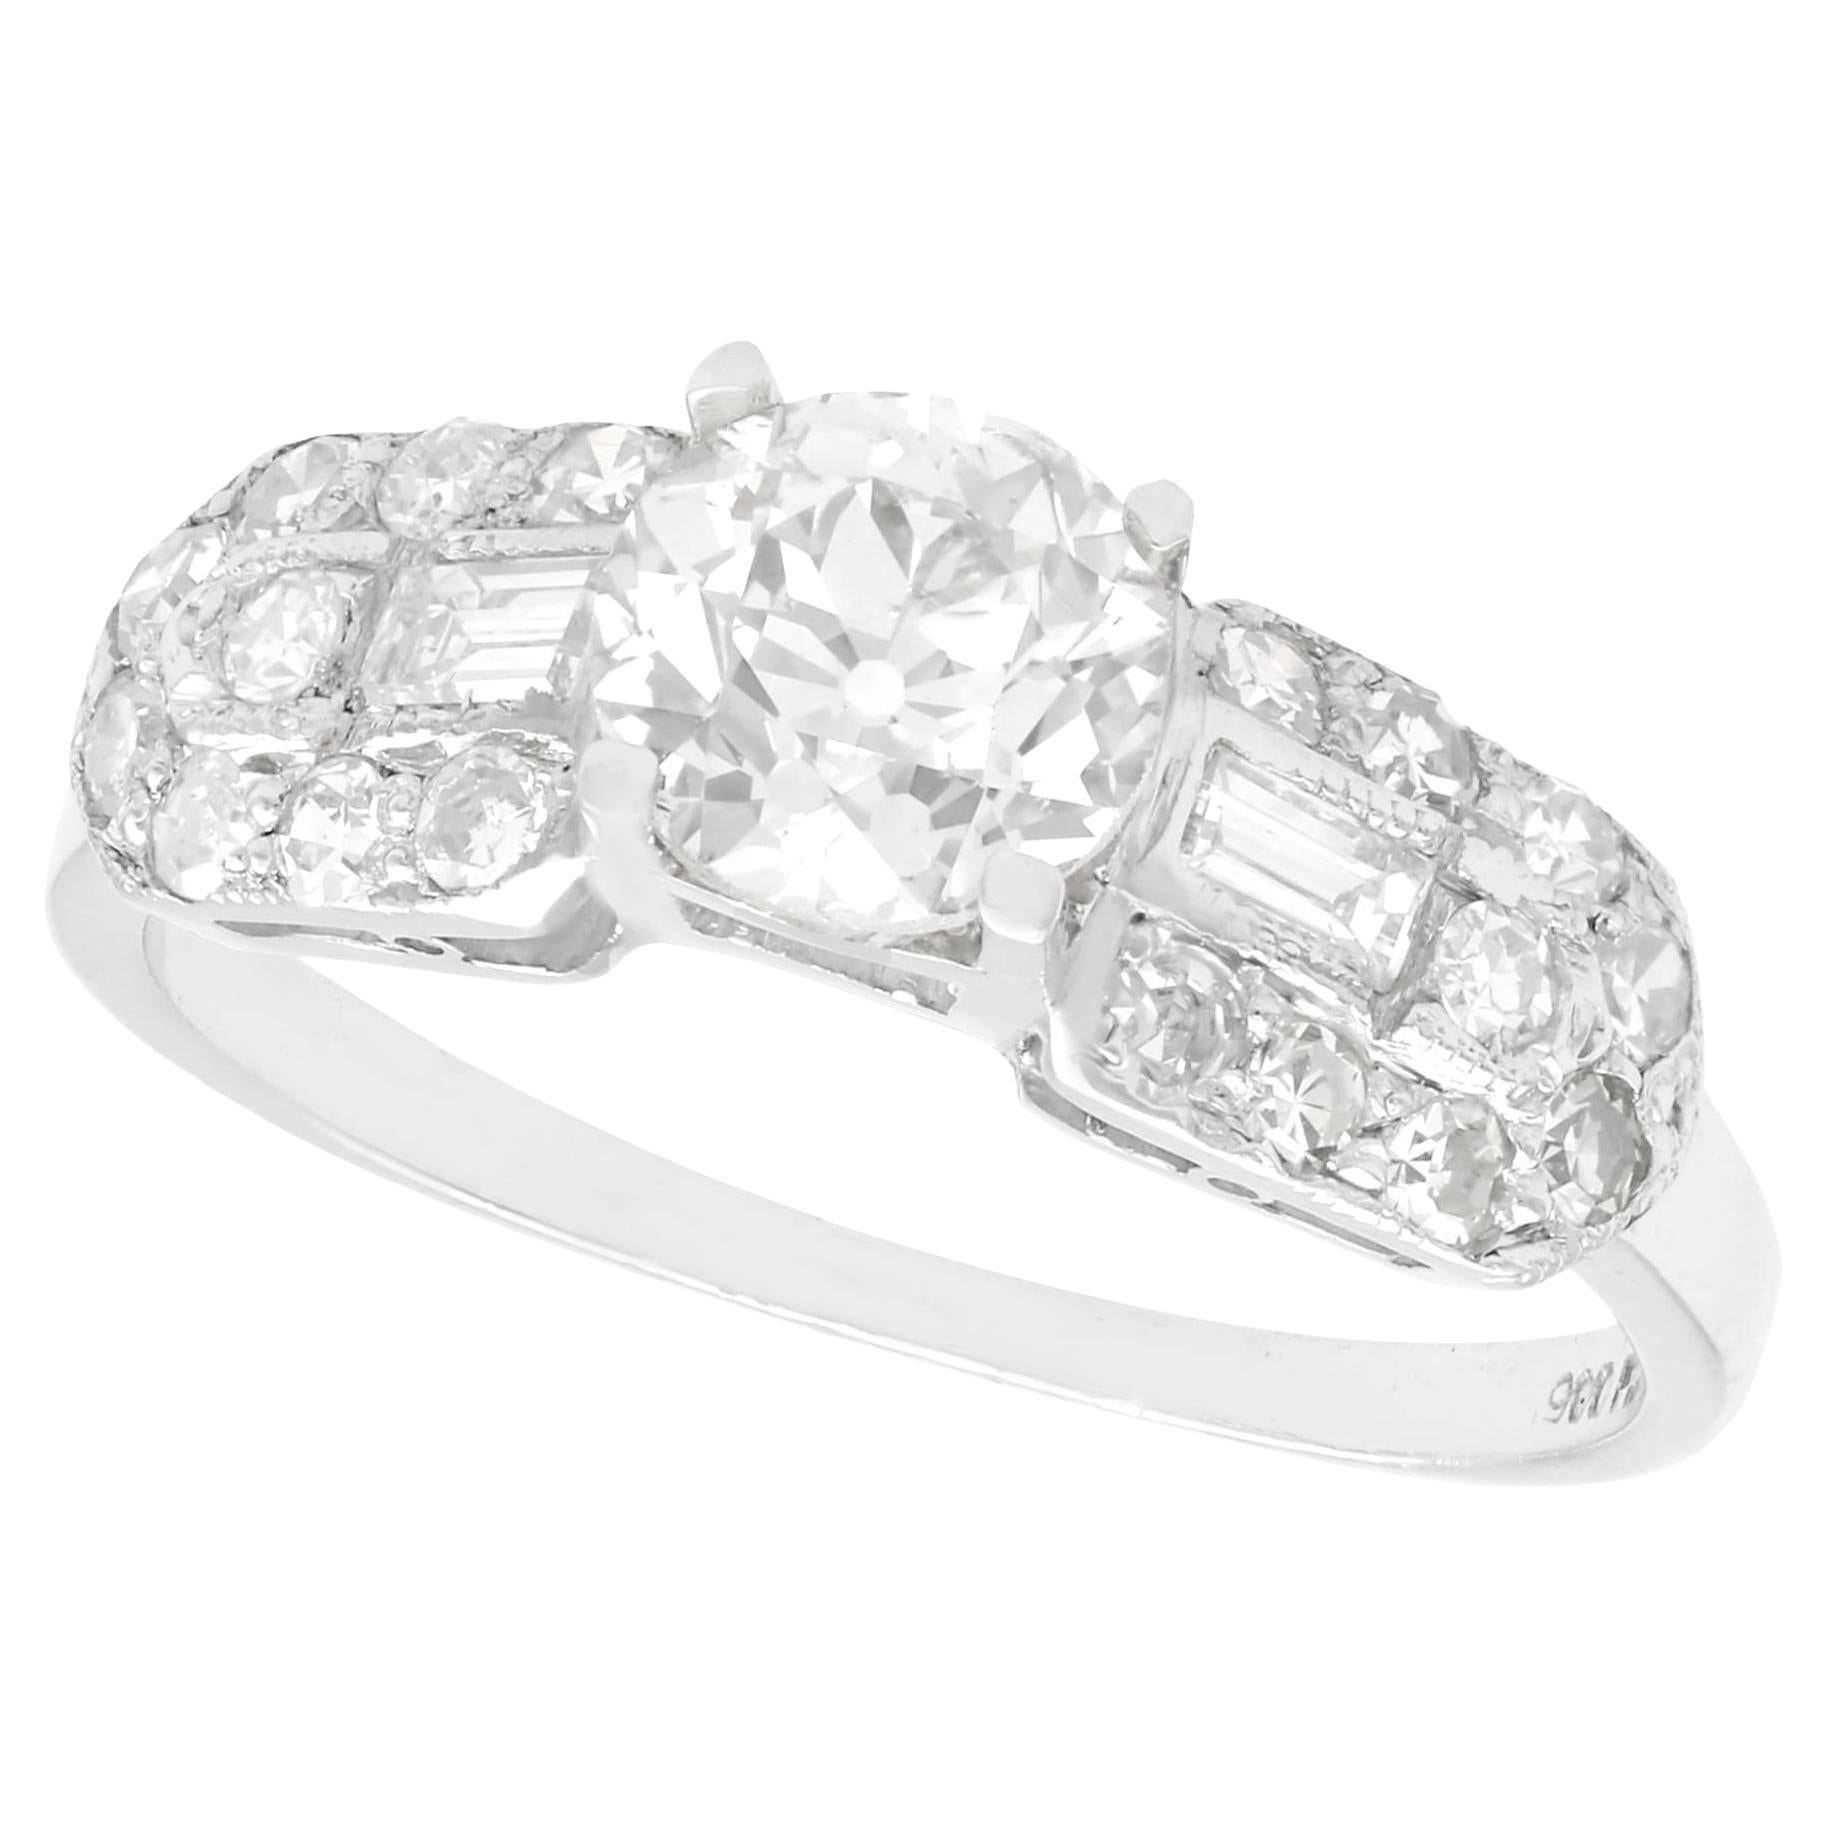 1940s 1.20 Carat Diamond and Platinum Engagement Ring